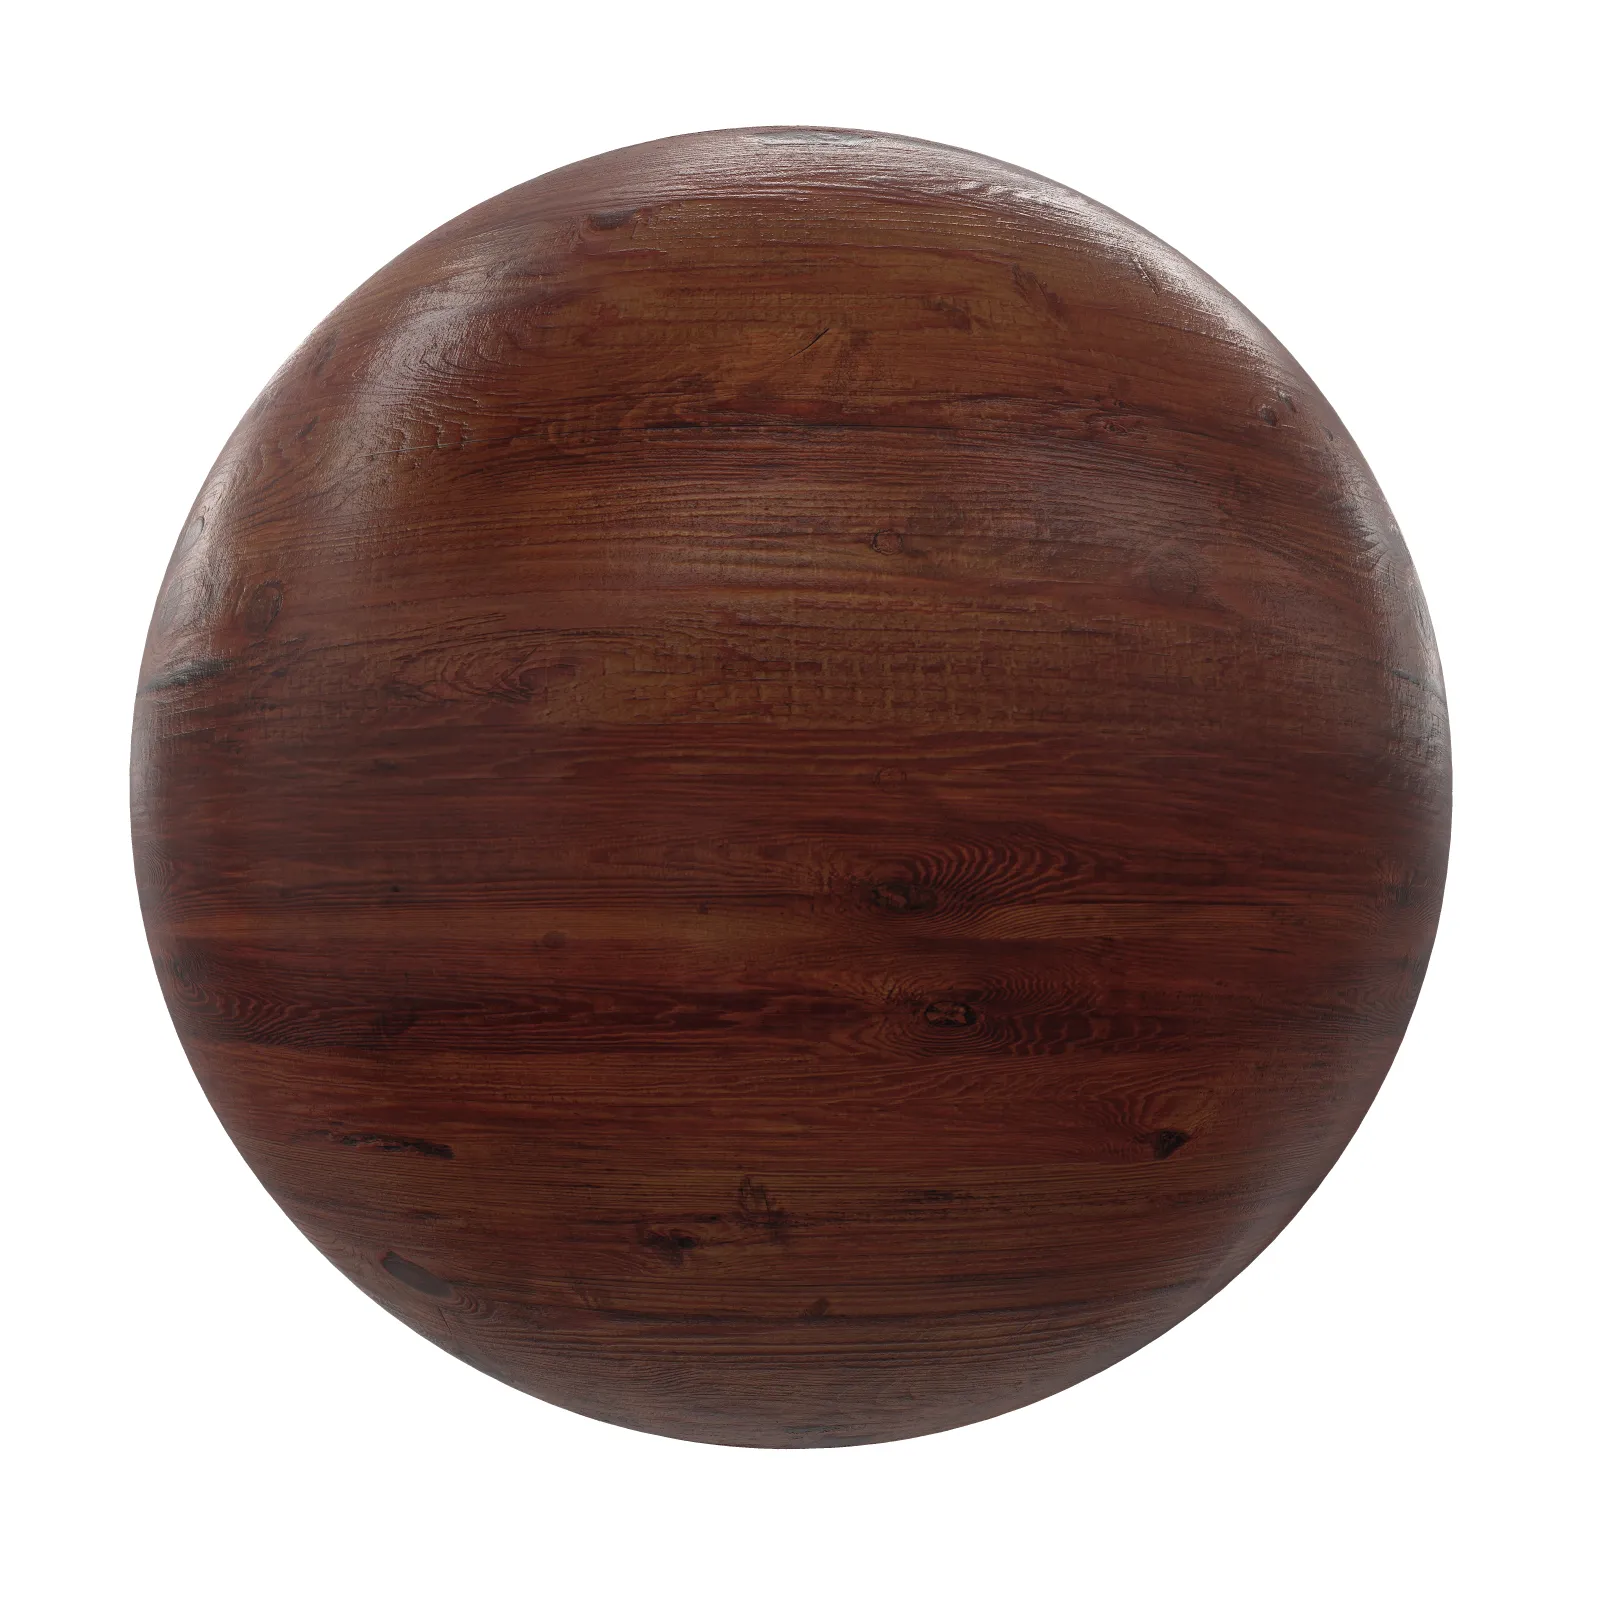 3ds Max Files – Texture – 8 – Wood Texture – 82 – Wood Texture by Minh Nguyen